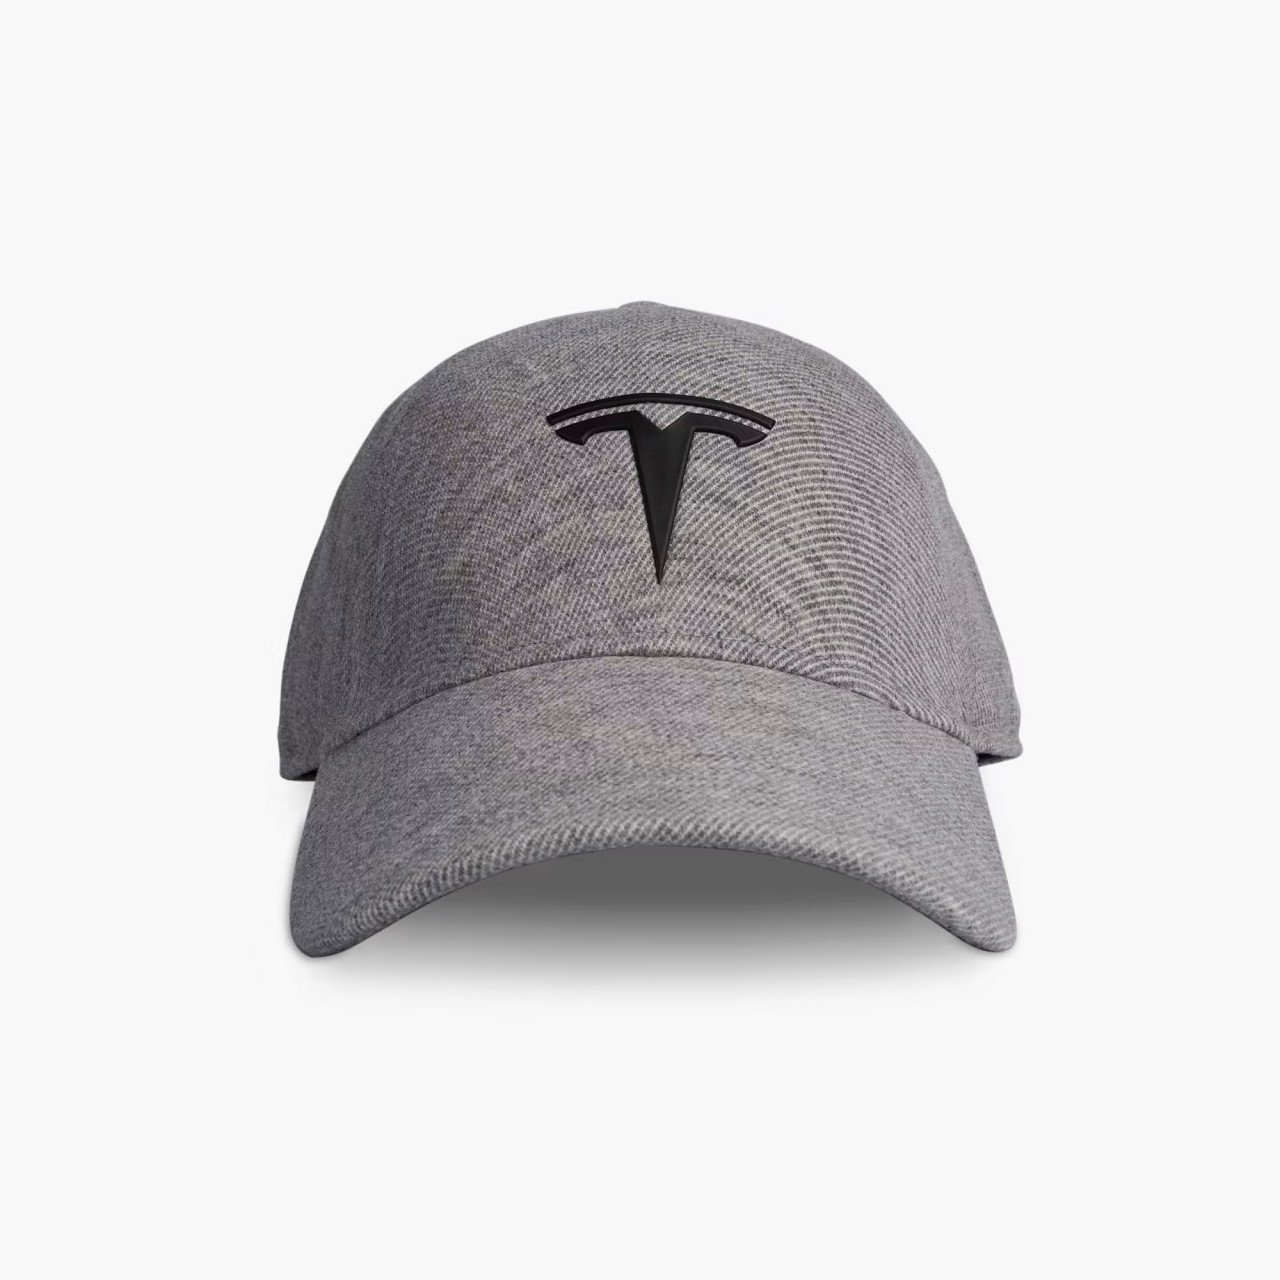  Topi berlogo Tesla